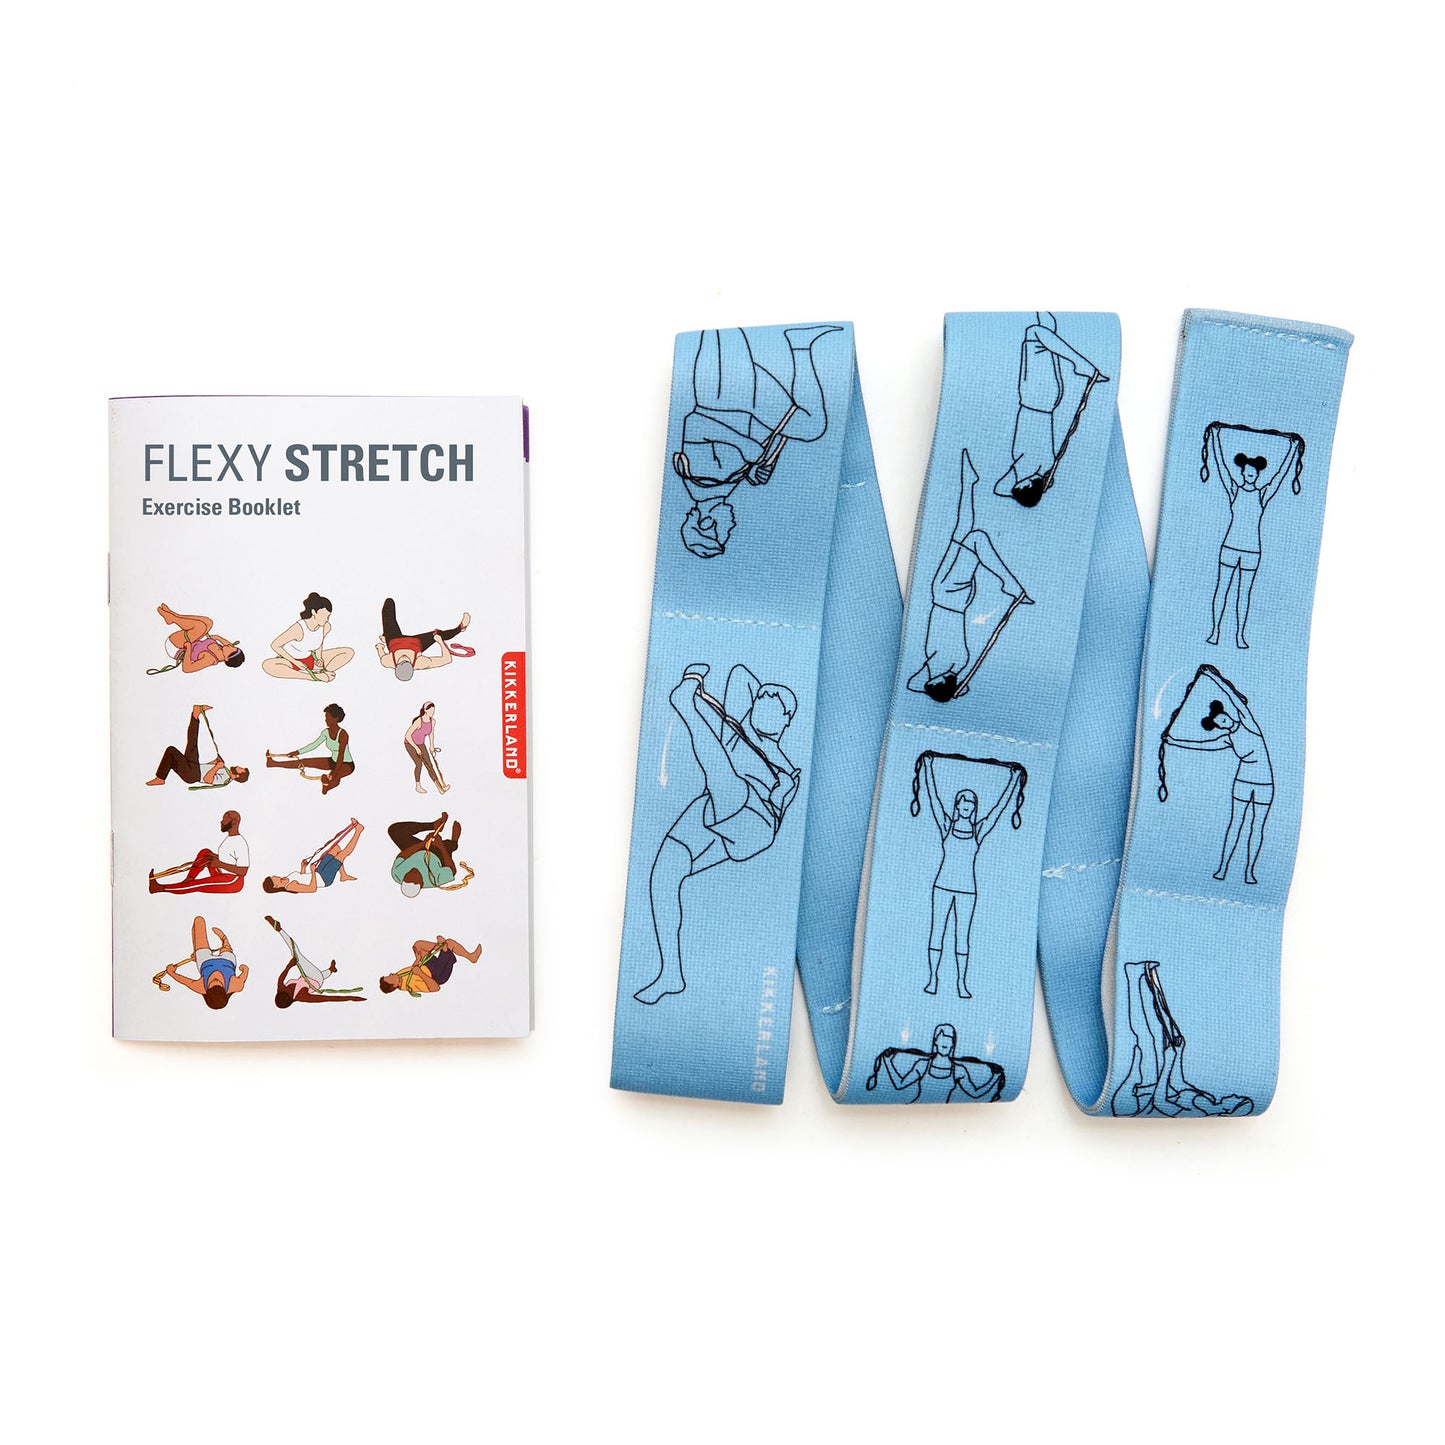 Flexy Stretch Strap